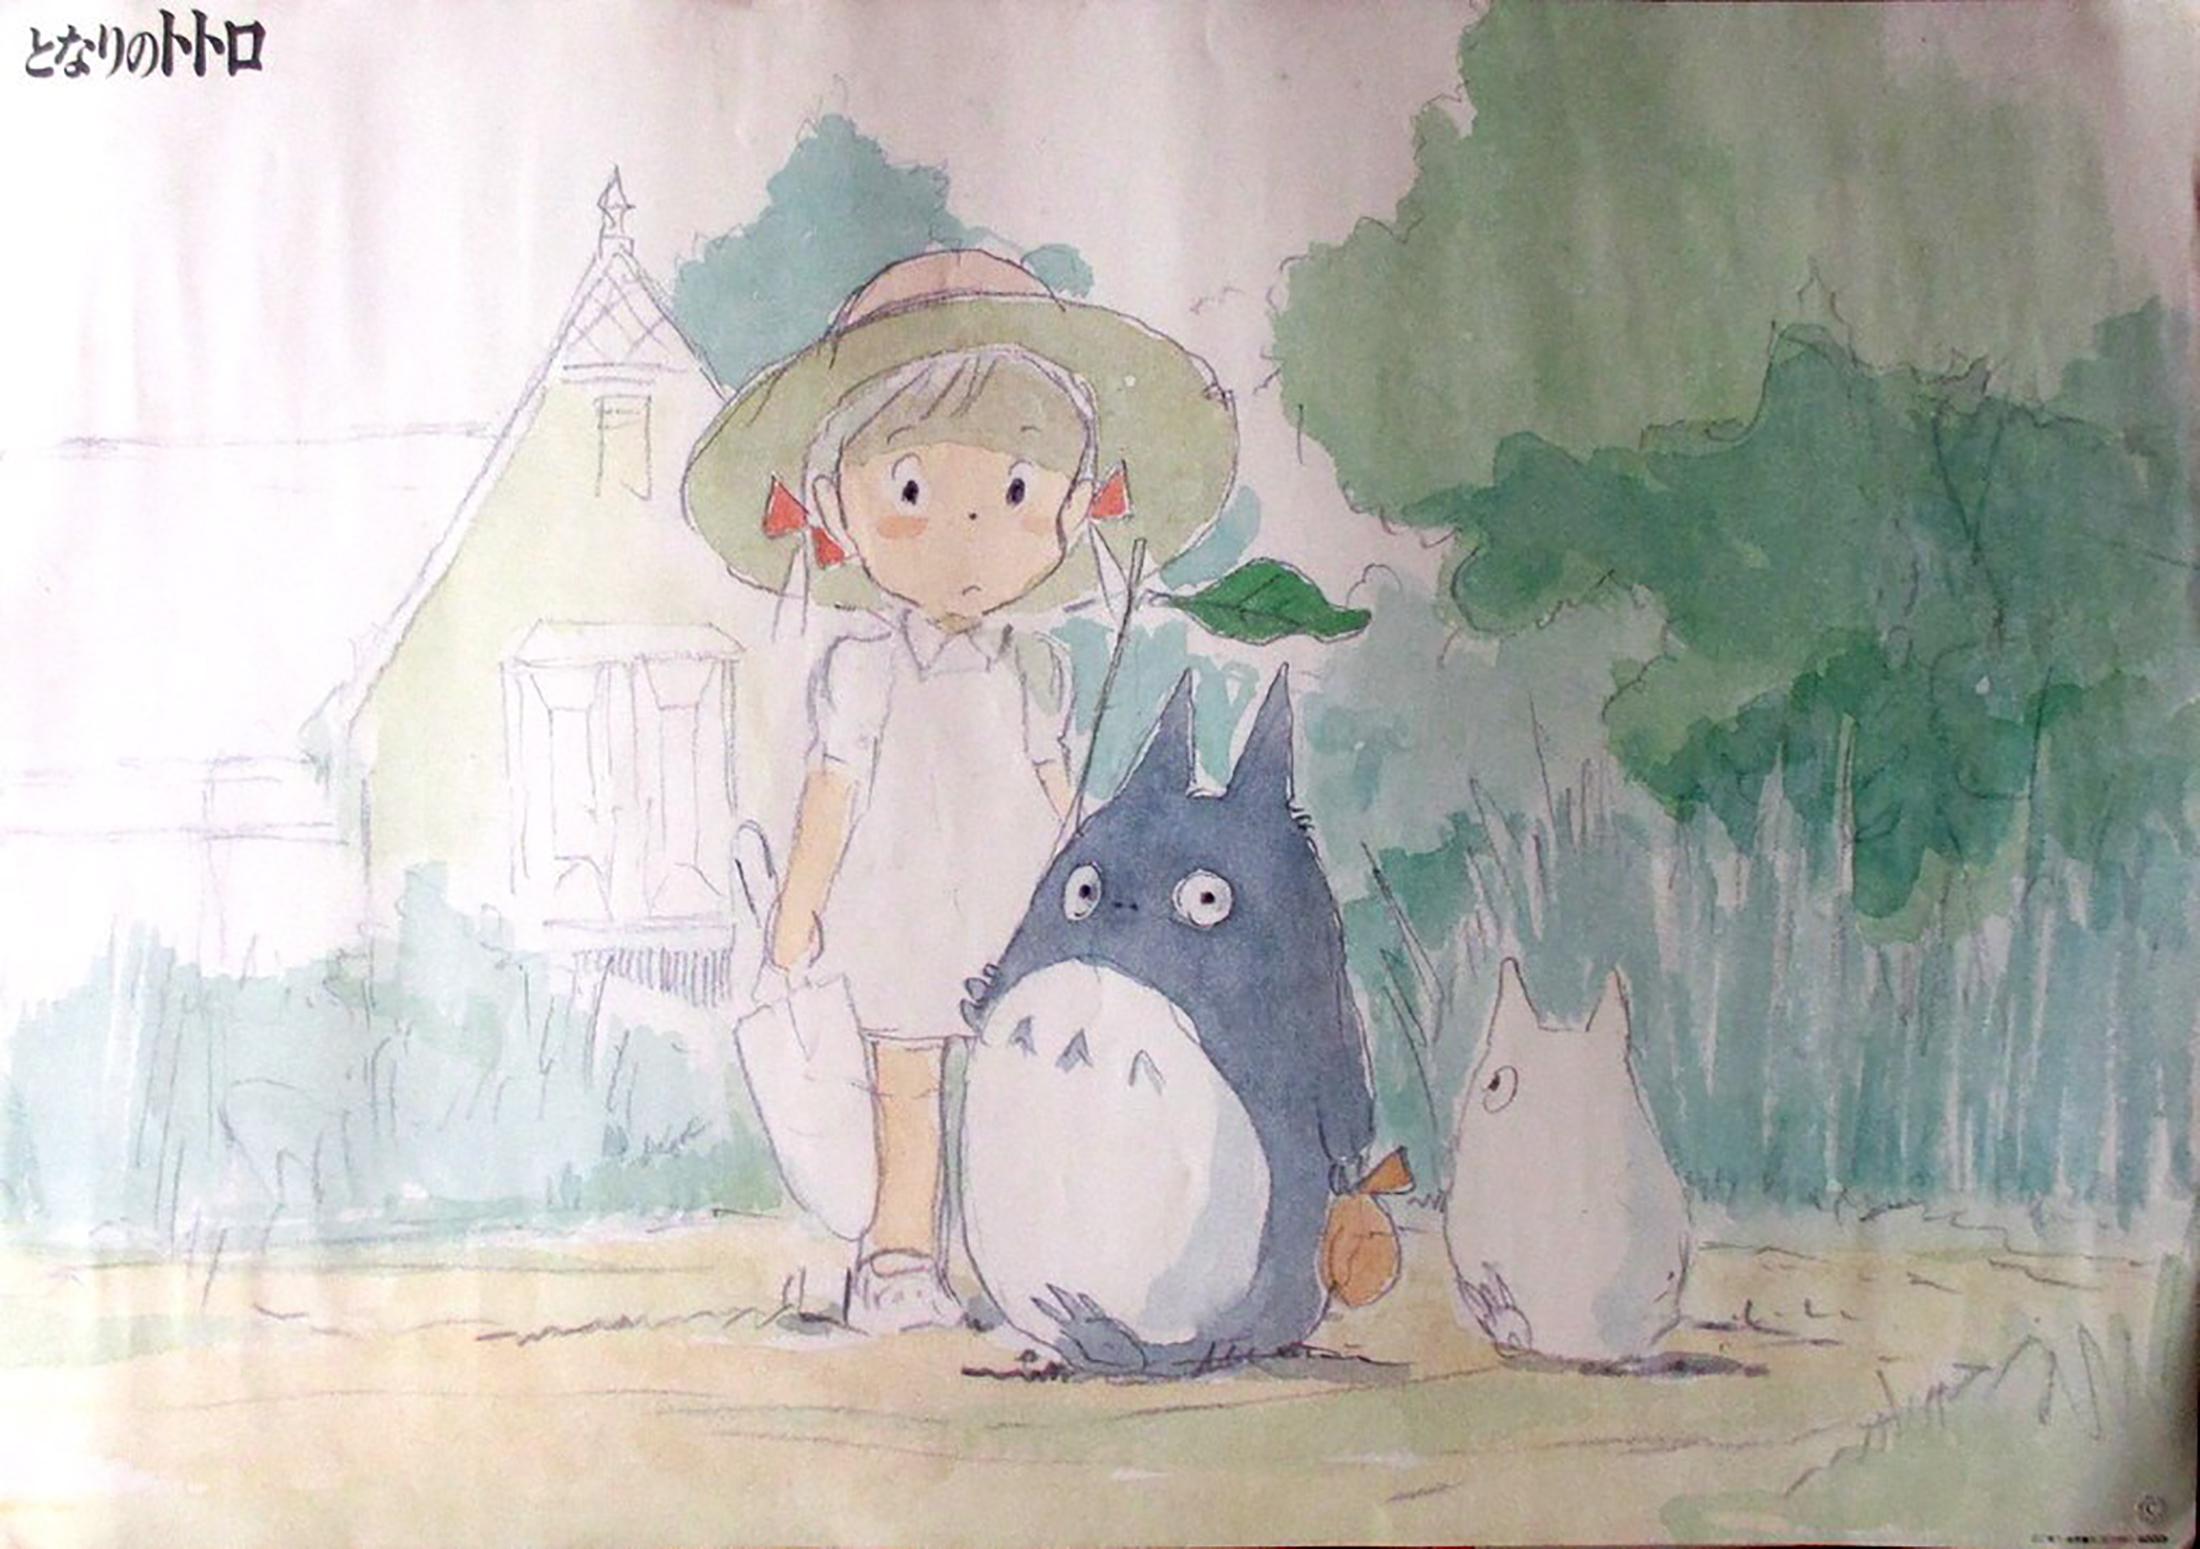 Unknown Print - My Neighbour Totoro Original Vintage Poster, Studio Ghibli (1988), Miyazaki